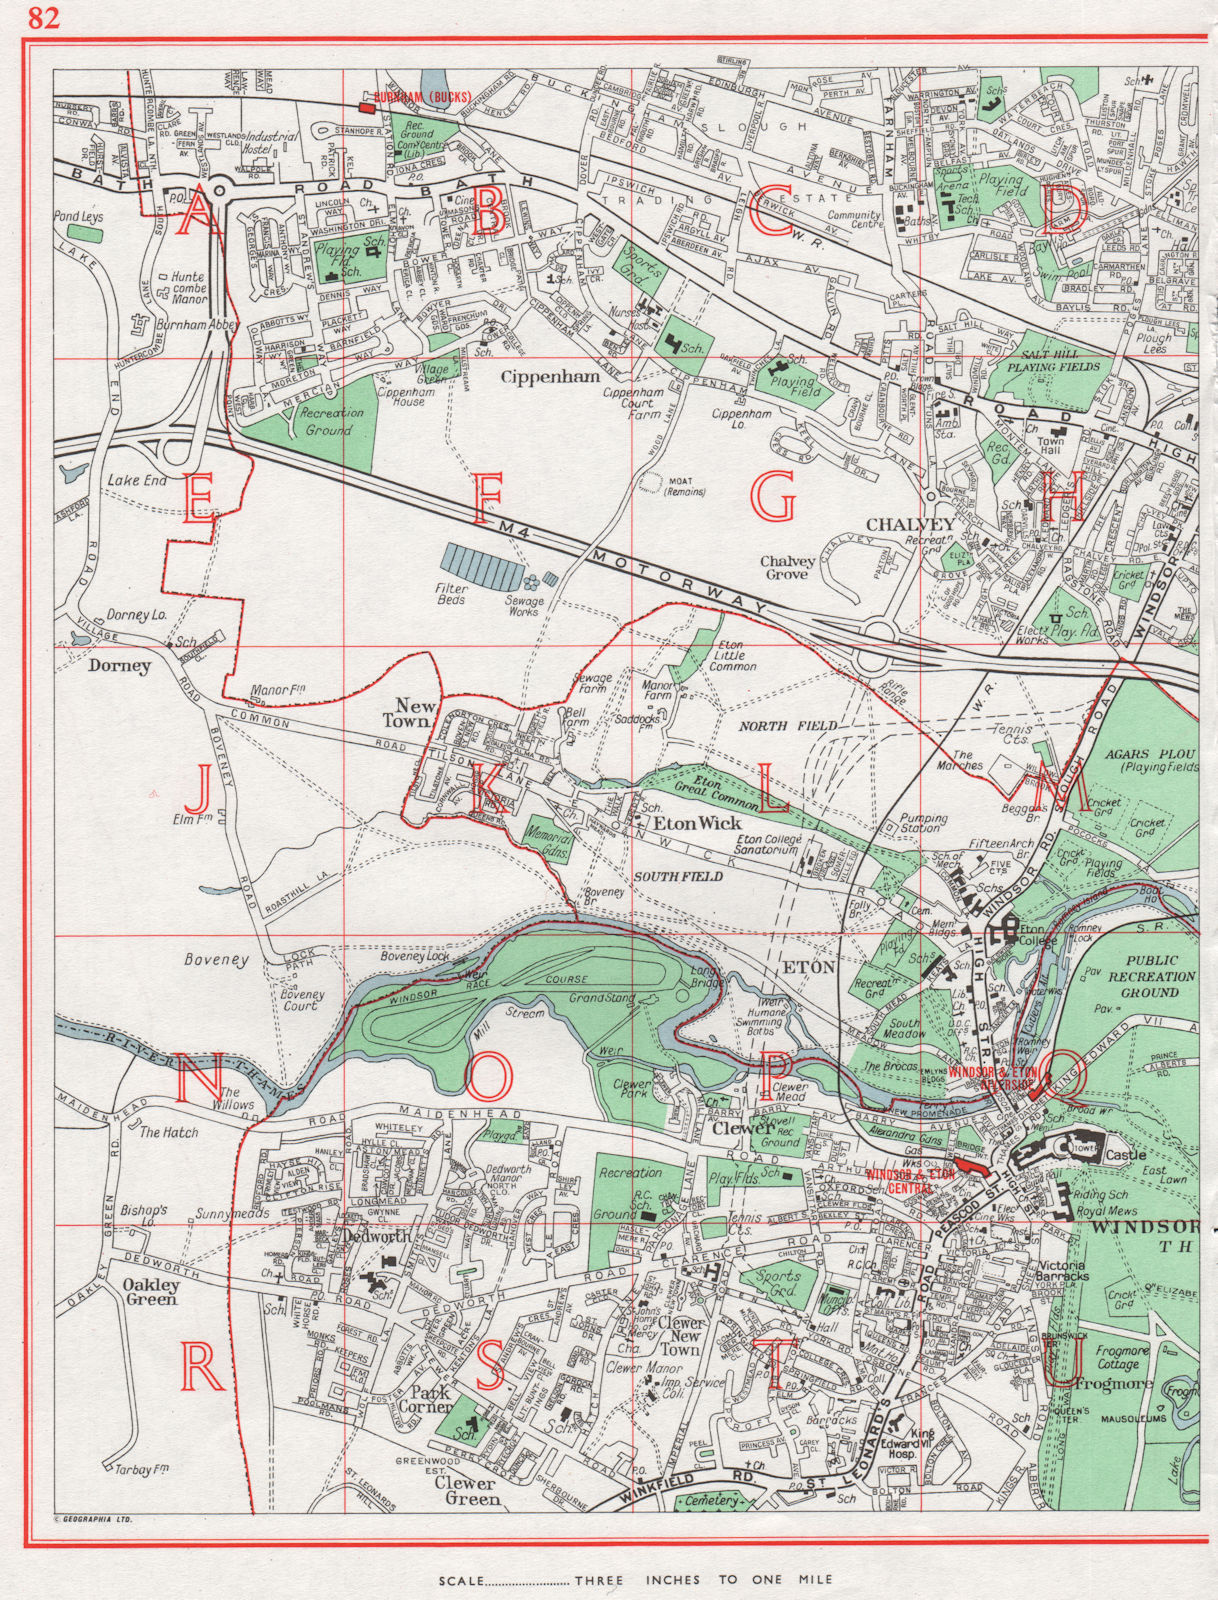 WINDSOR & ETON. Slough Cippenham Chalvey Dorney Eton Wick. Pre-A332 1964 map